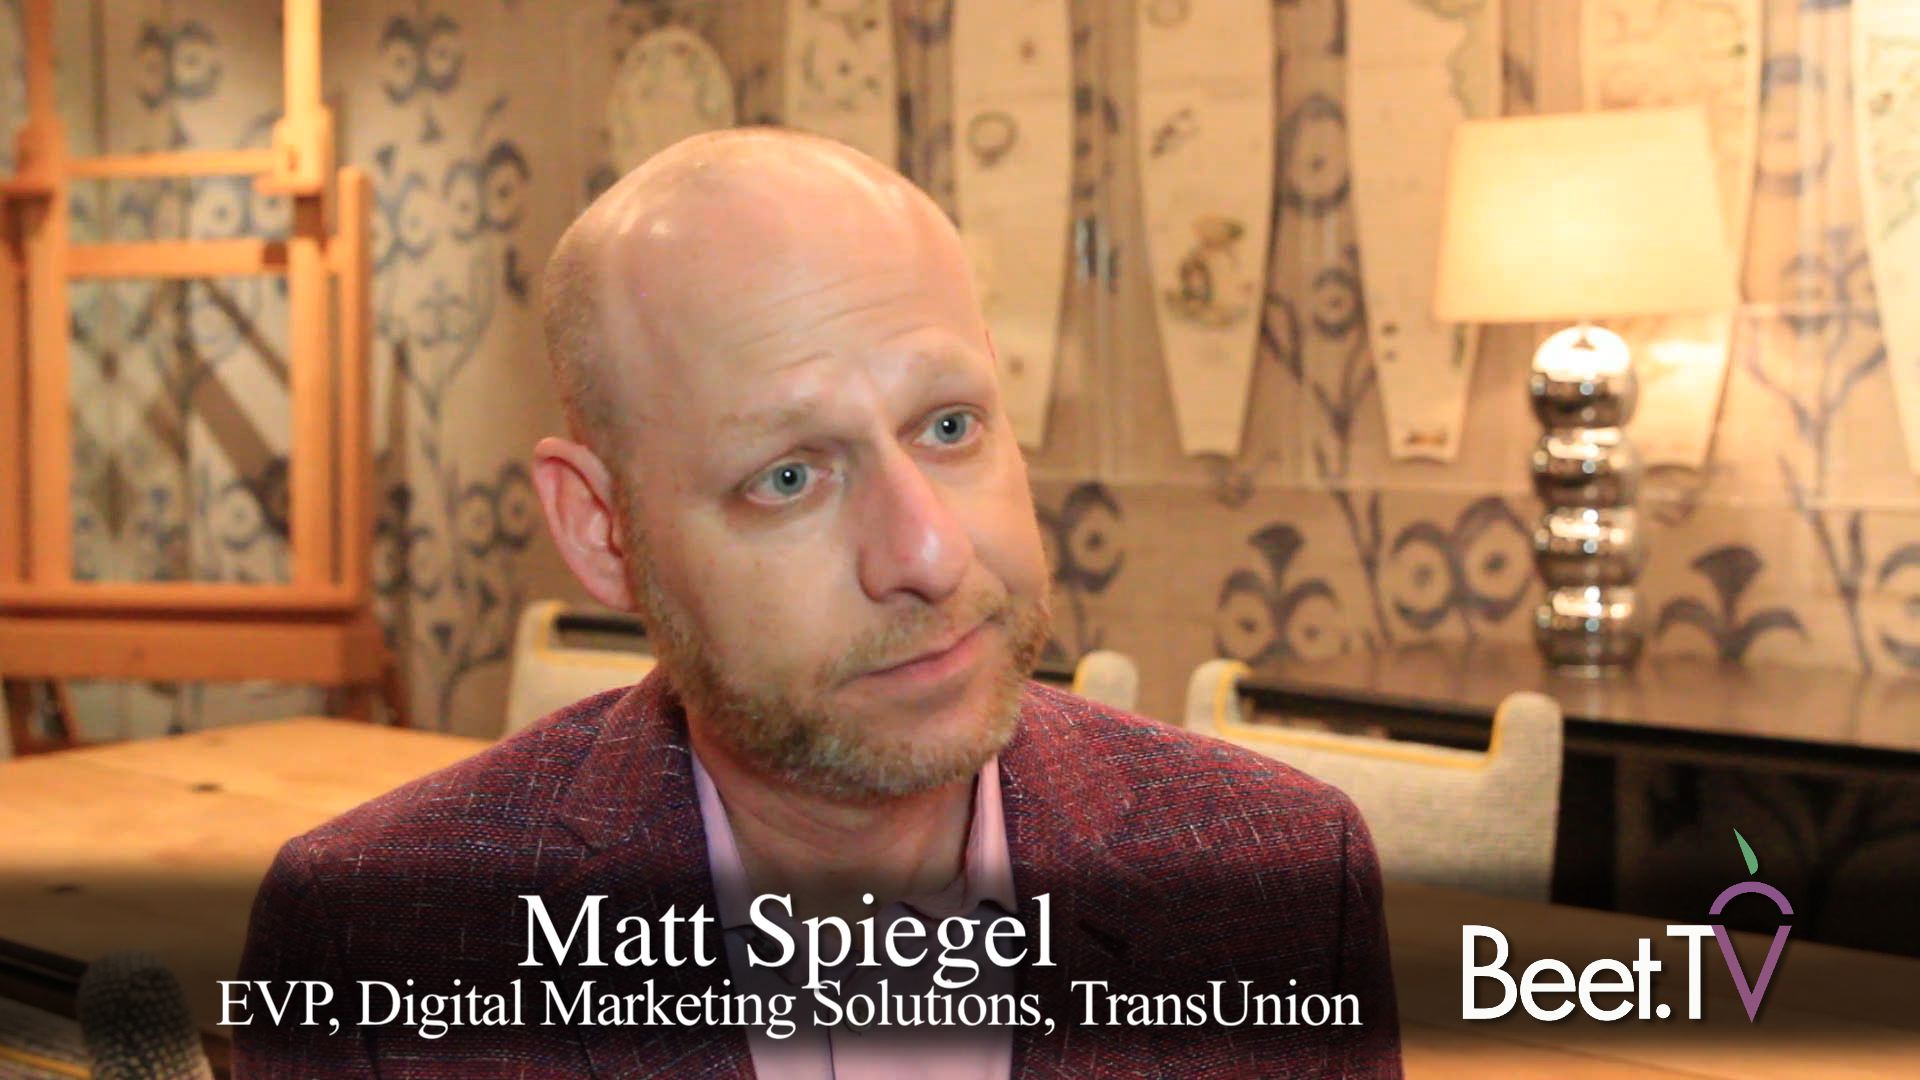 Credit Score Giant TransUnion Making Moves in Media Sector, Matt Spiegel explains